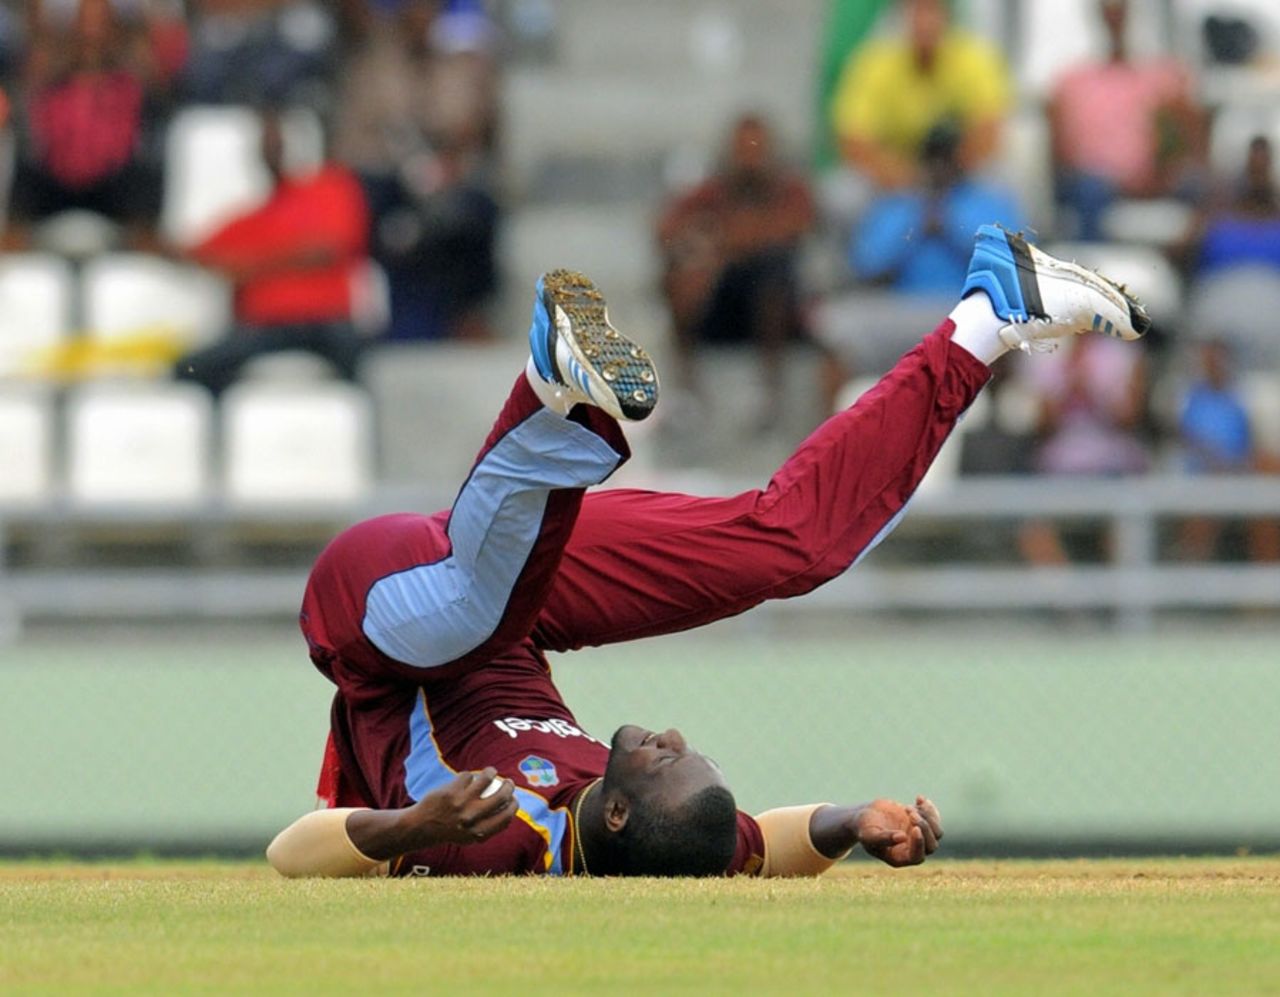 Darren Sammy took a sharp return catch to dismiss Kane Williamson, West Indies v New Zealand, 1st T20I, Roseau, July 5, 2014